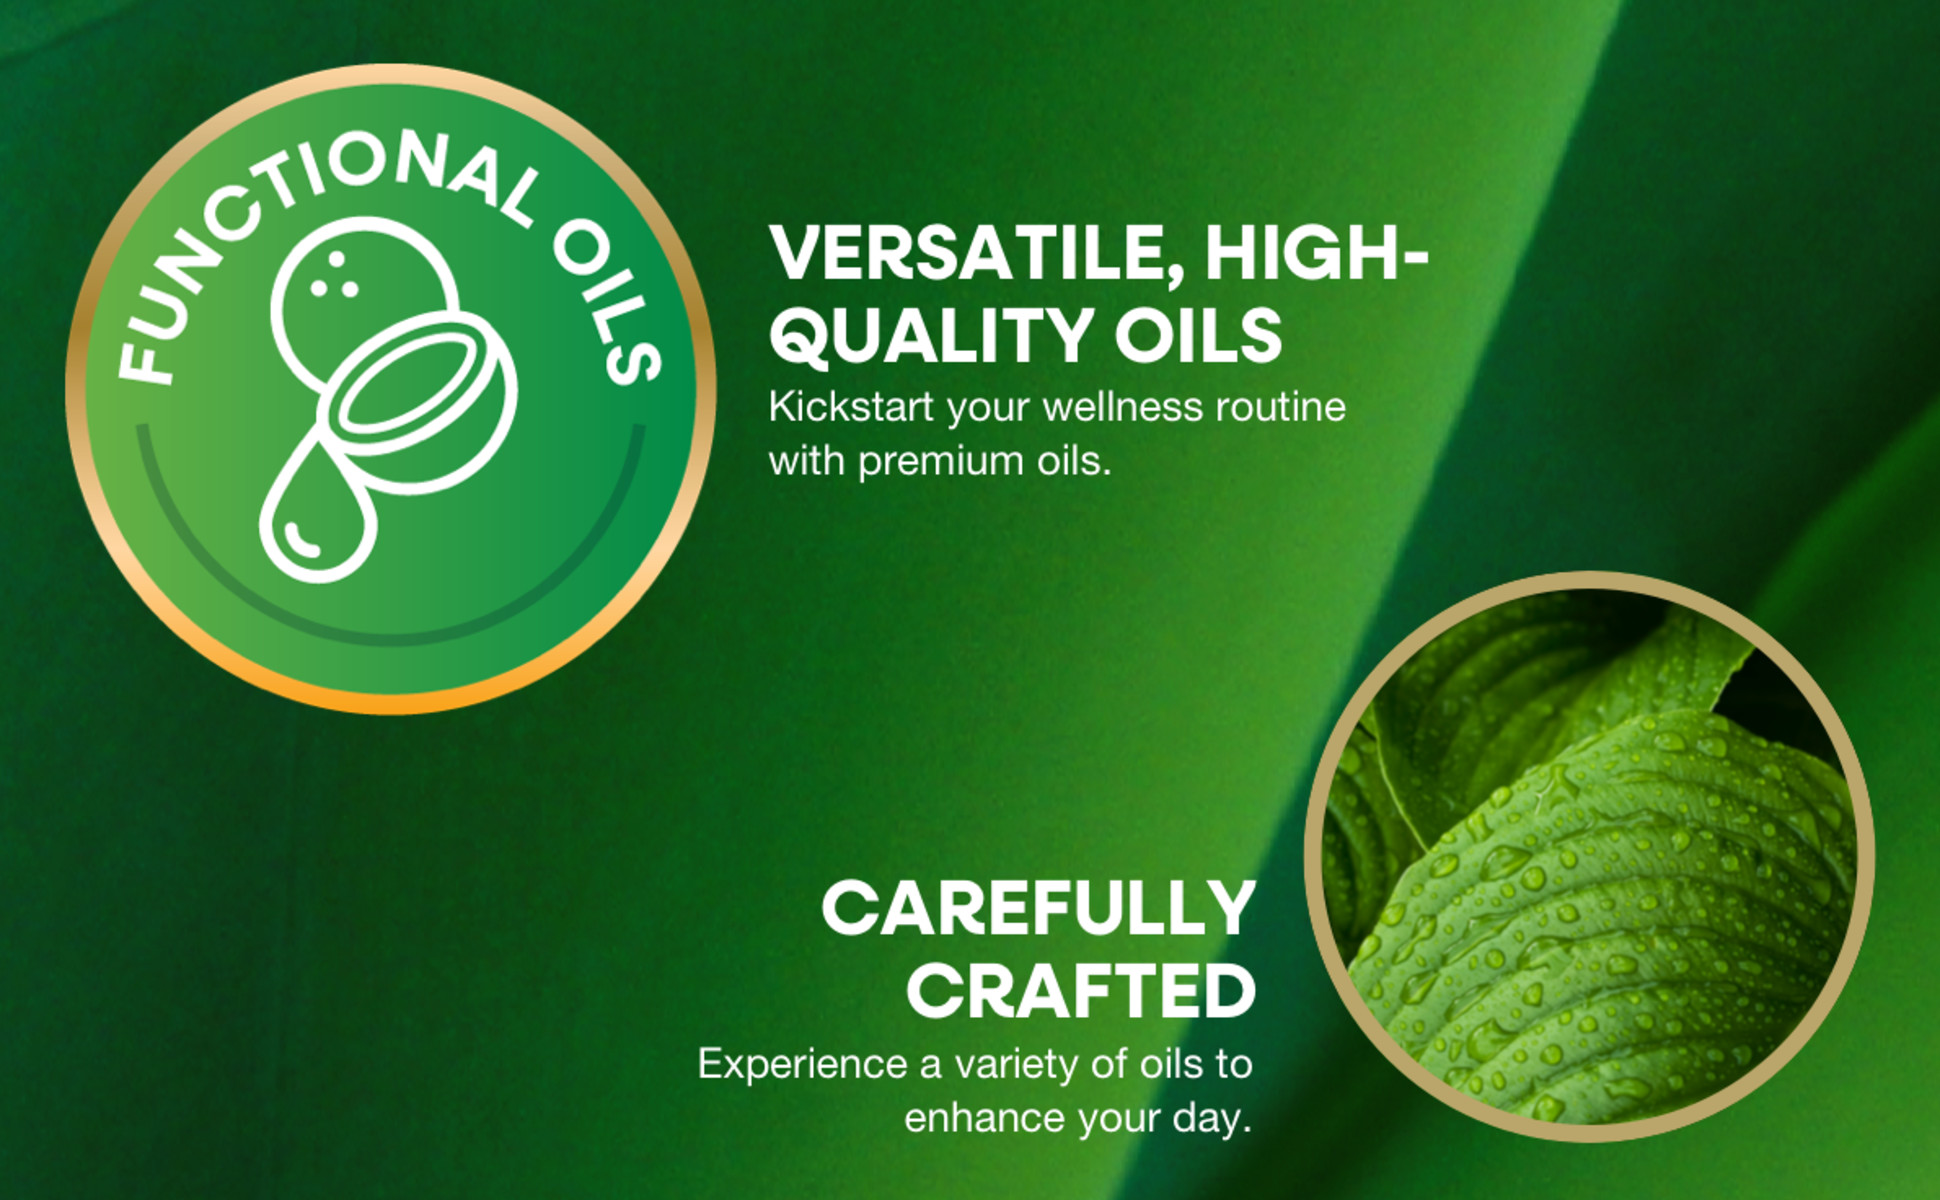 Nature's Way 100% Potency Organic MCT Oil, 16 fl oz